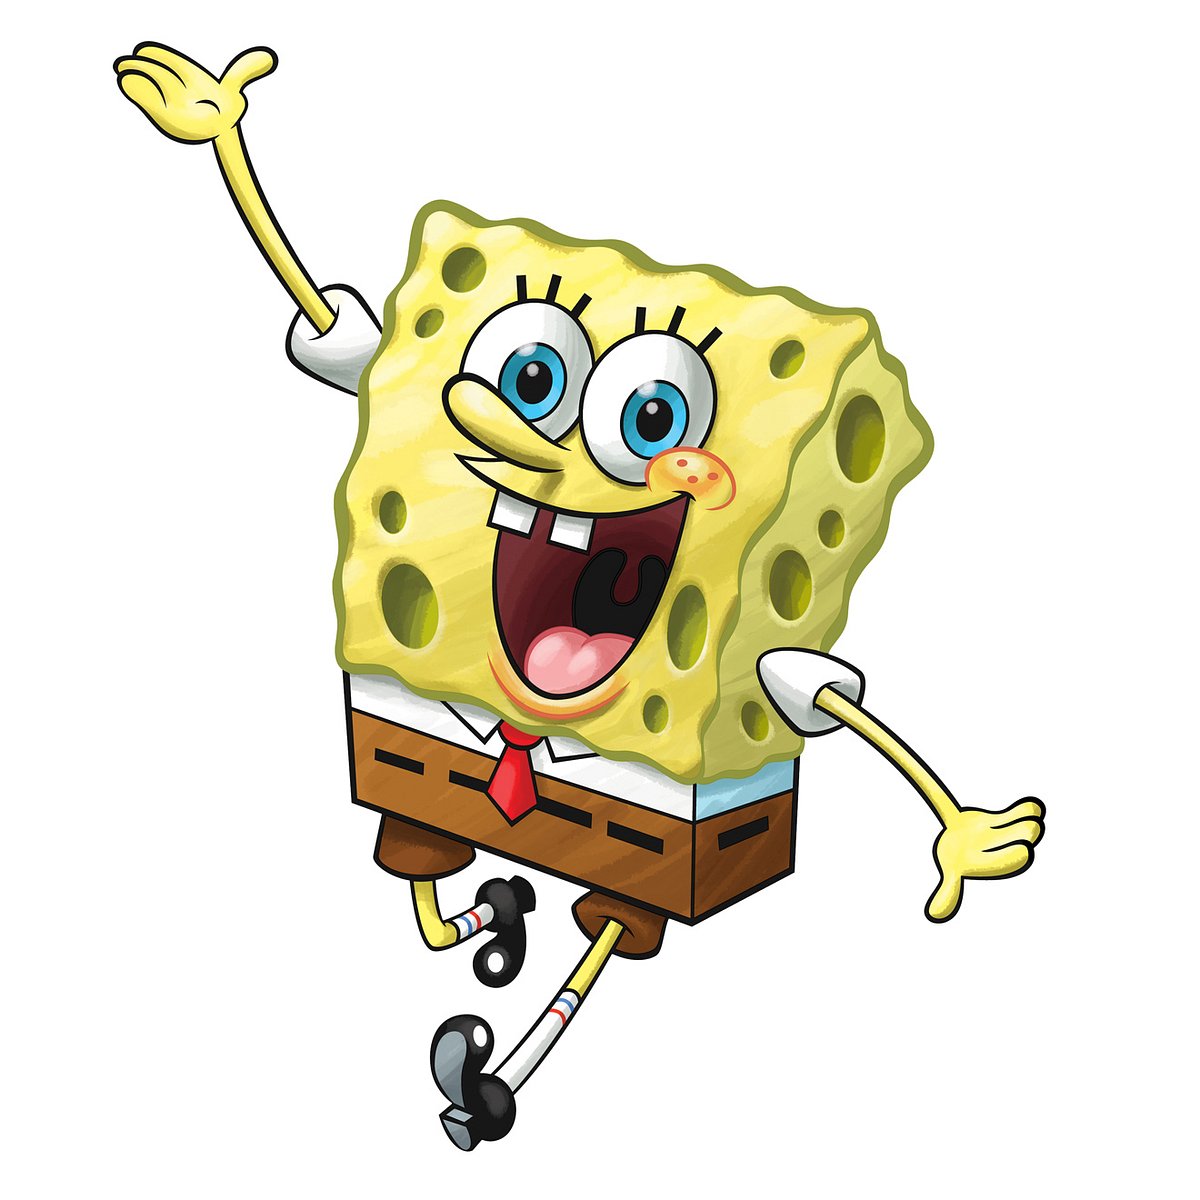 SpongeBob bringt uns seit 1999 zum Lachen